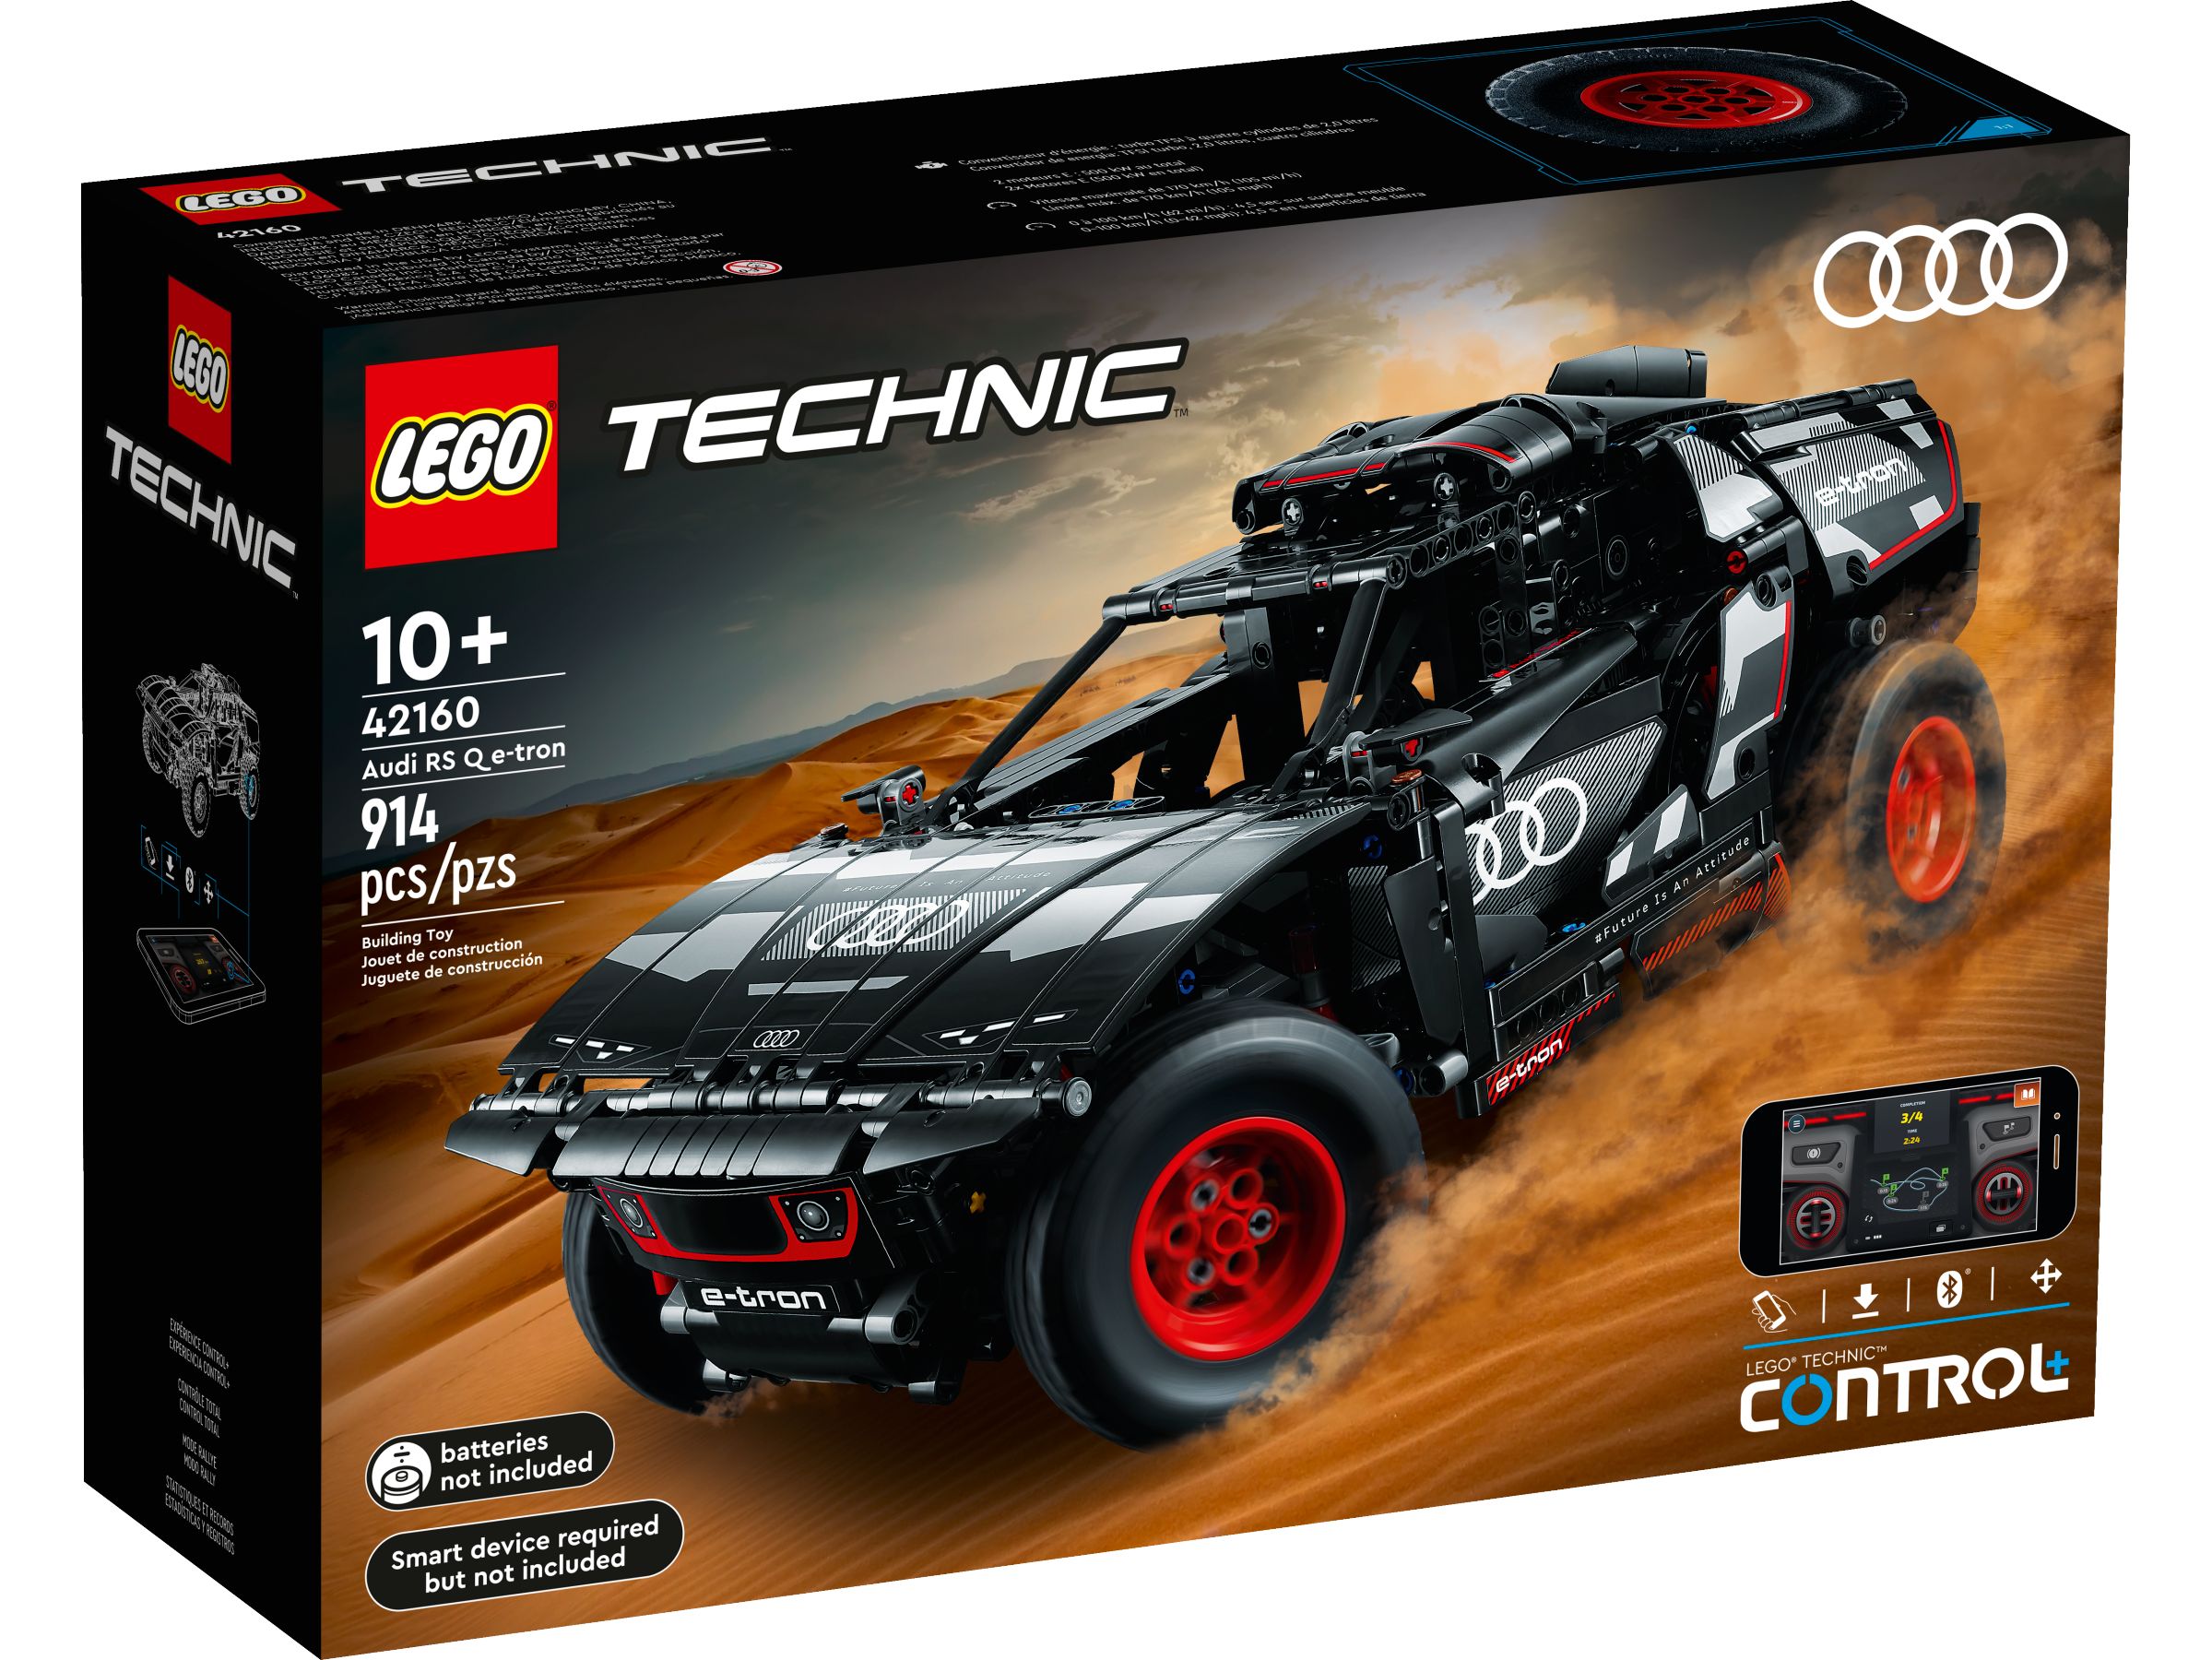 LEGO Technic 42160 Audi RS Q e-tron LEGO_42160_alt1.jpg